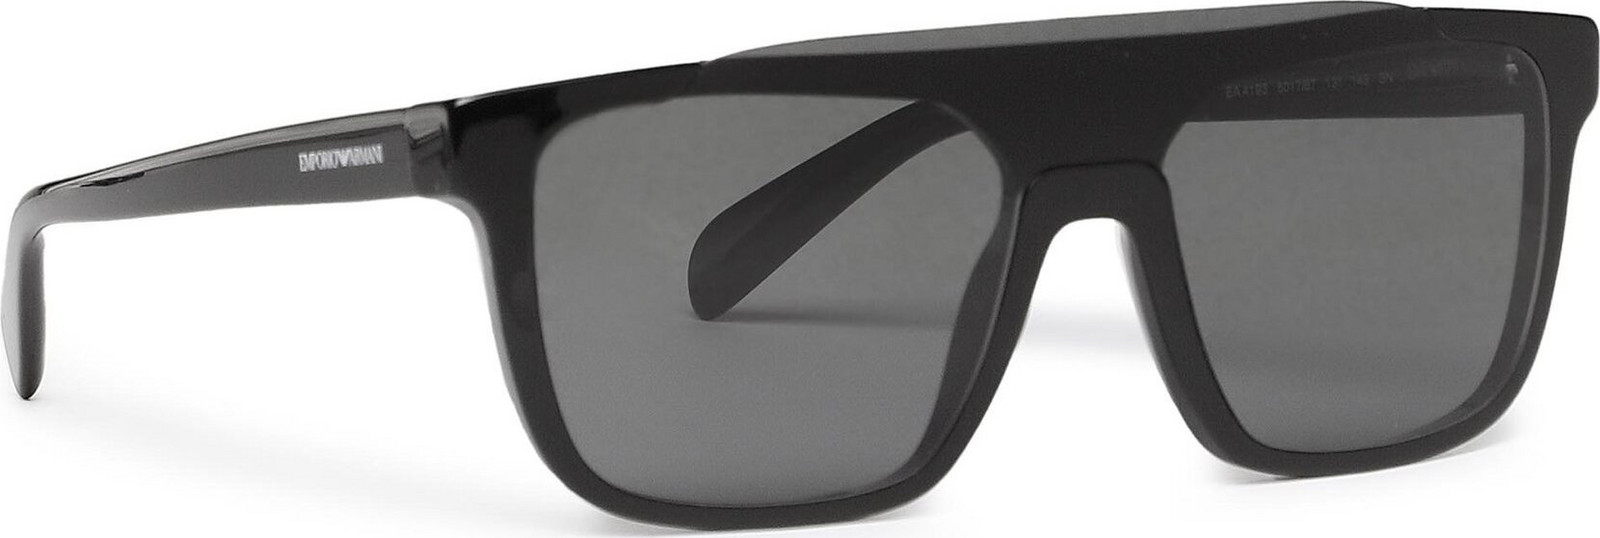 Sluneční brýle Emporio Armani 0EA4193 501787 Skiny Black/Dark Grey